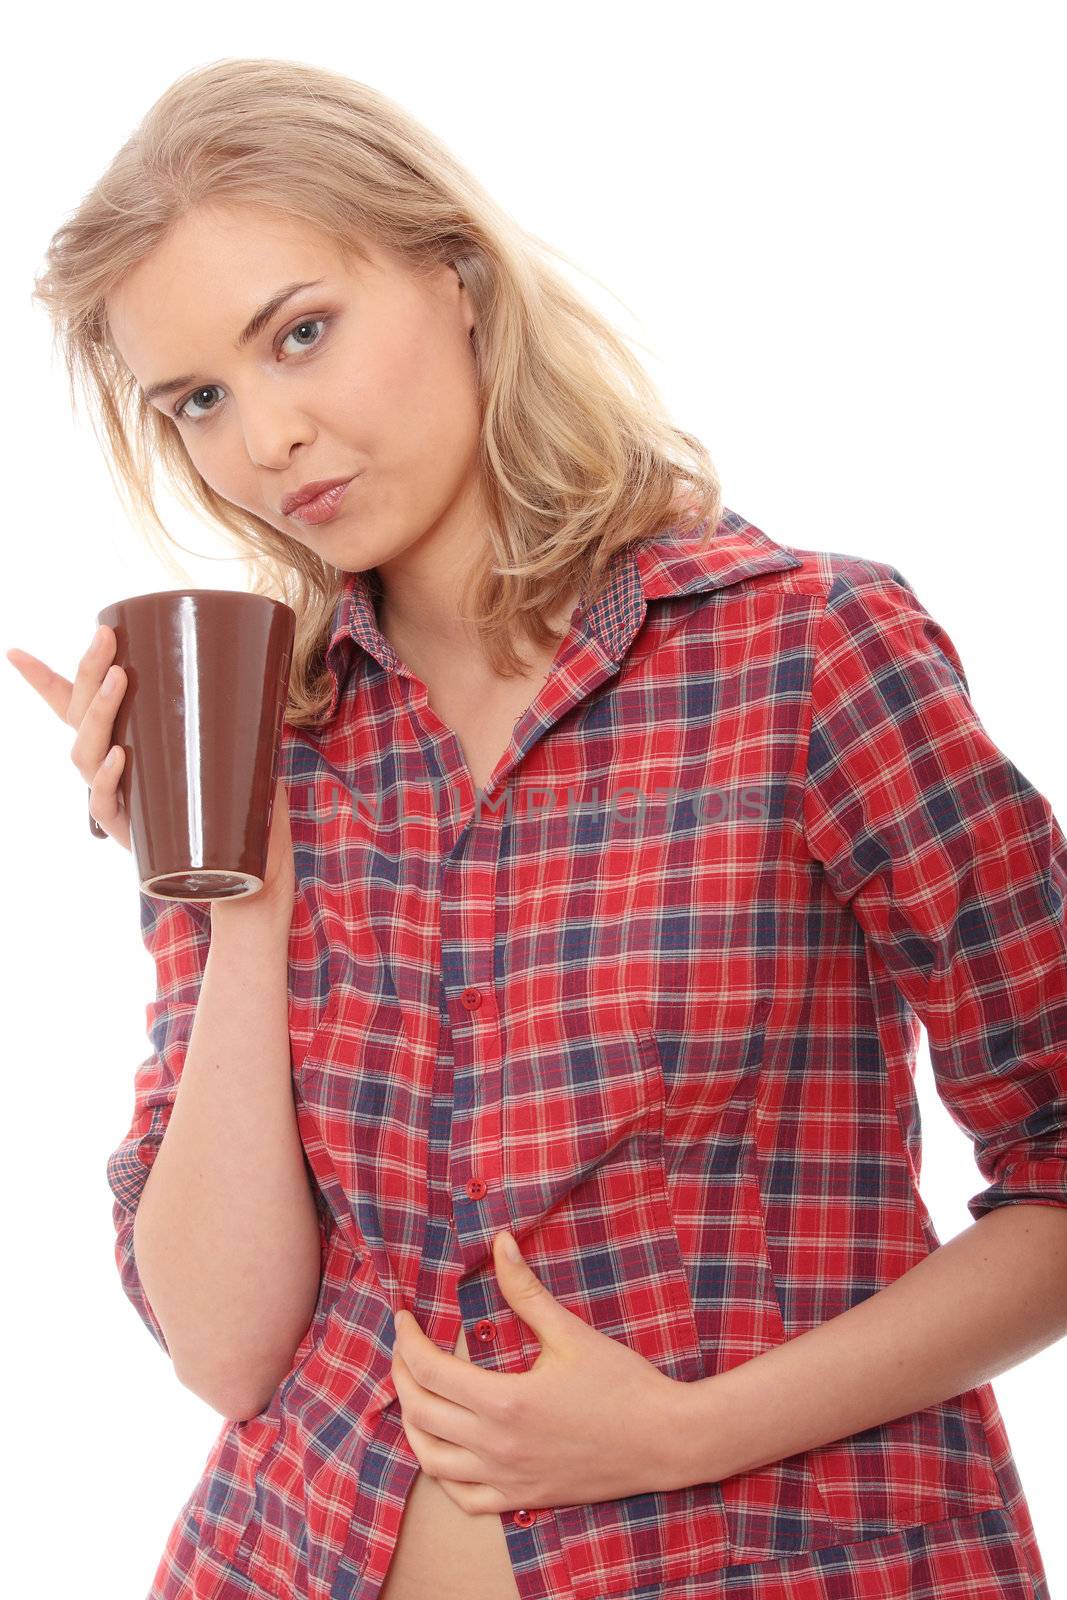 The beautiful young woman drinks morning coffee or tea